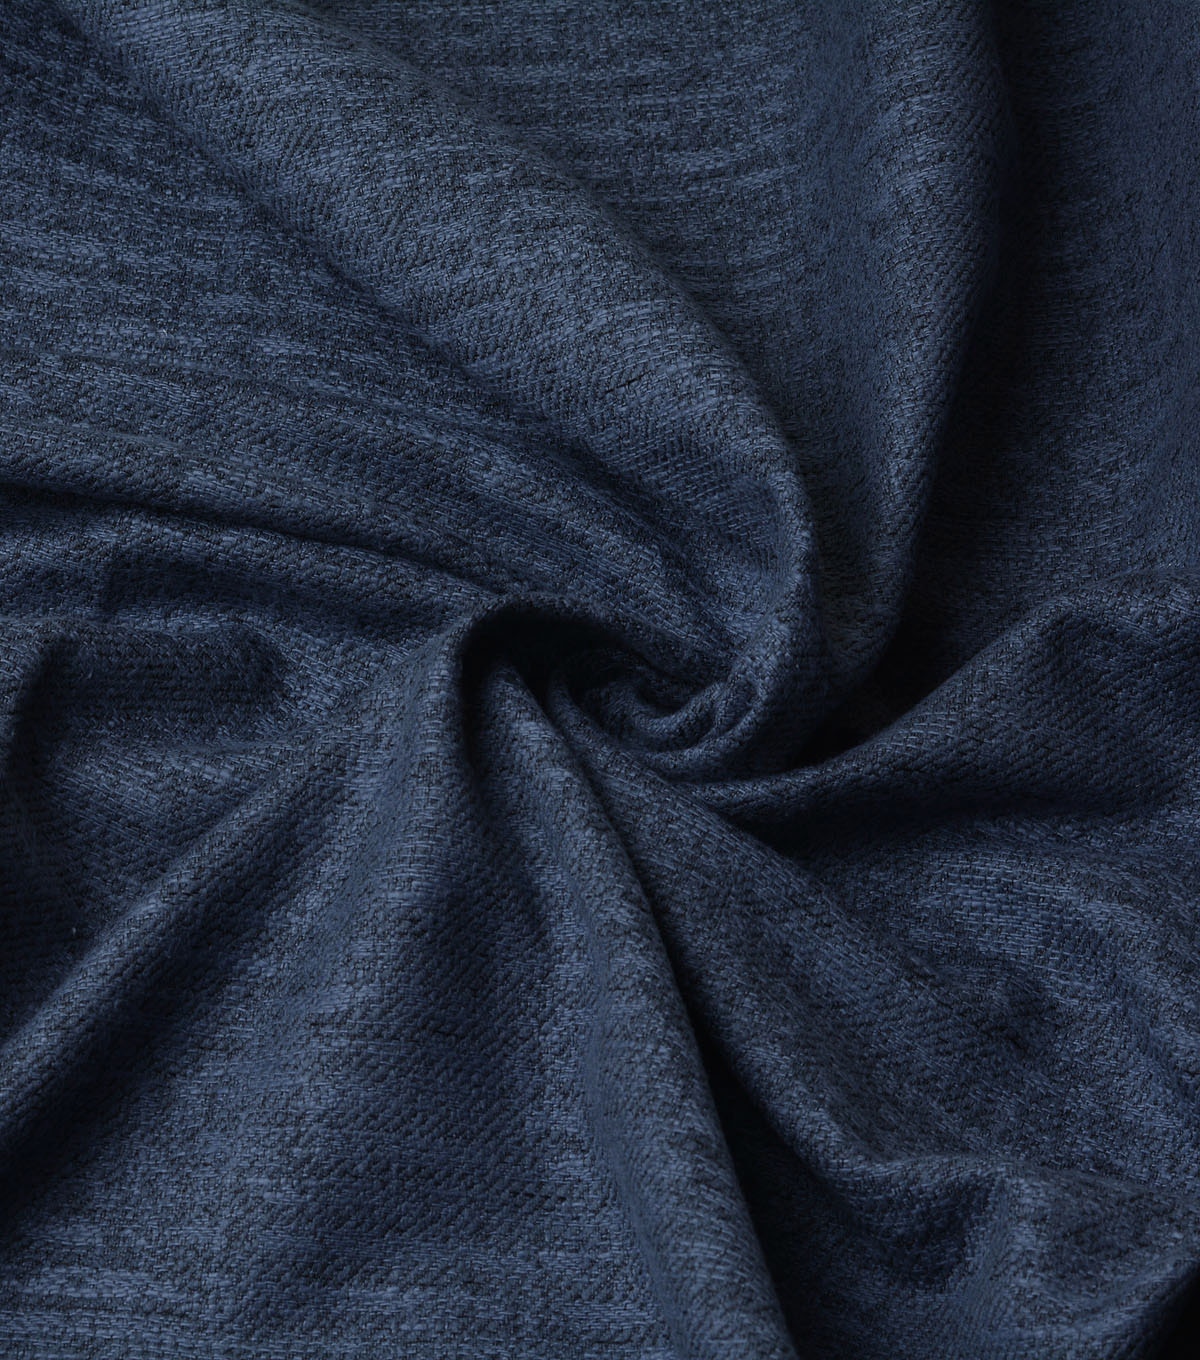 PKL Studio Upholstery Fabric Shifting Tides Indigo | JOANN